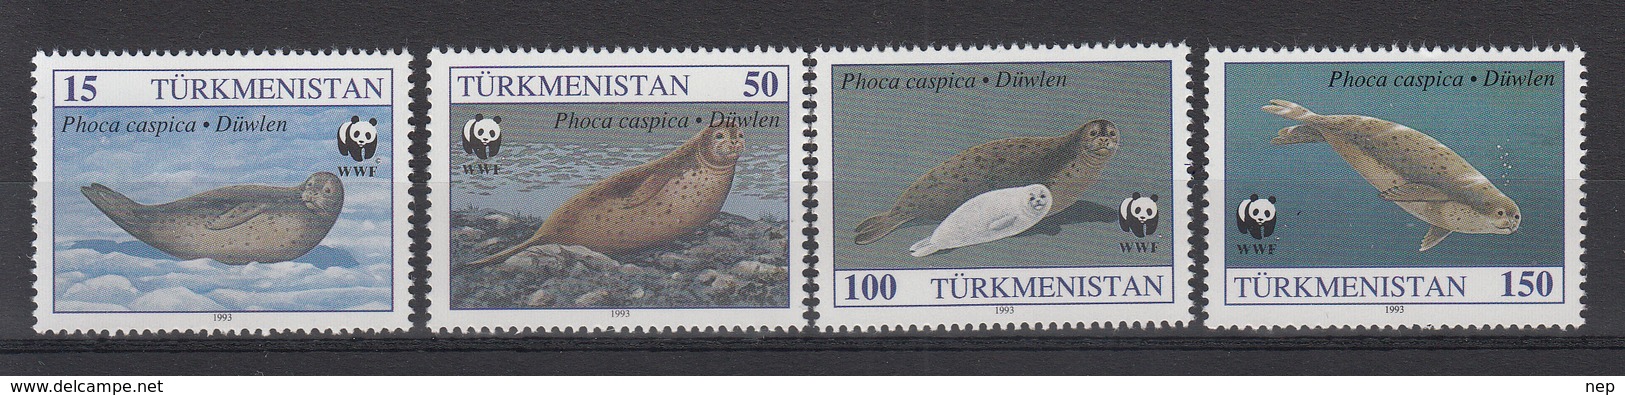 WWF - Domfil - 1993 - TURKMENISTAN - Nr 150 - MNH** - Unused Stamps